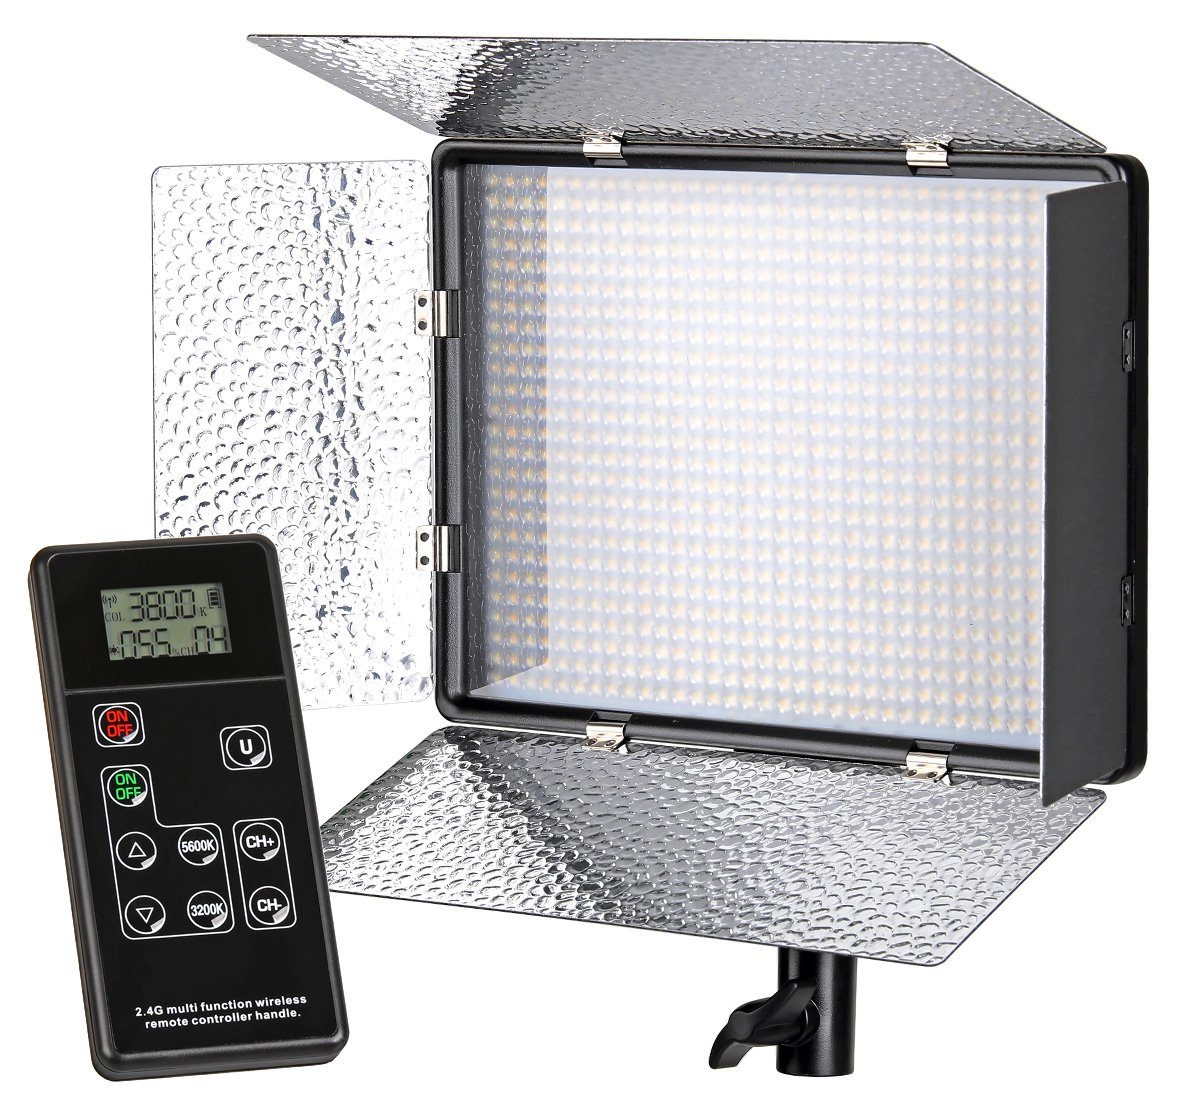 ayex LED Bilderleuchte Profi Videoleuchte 900 LEDs 3200K-5600K inkl. Funk-Fernbedienung